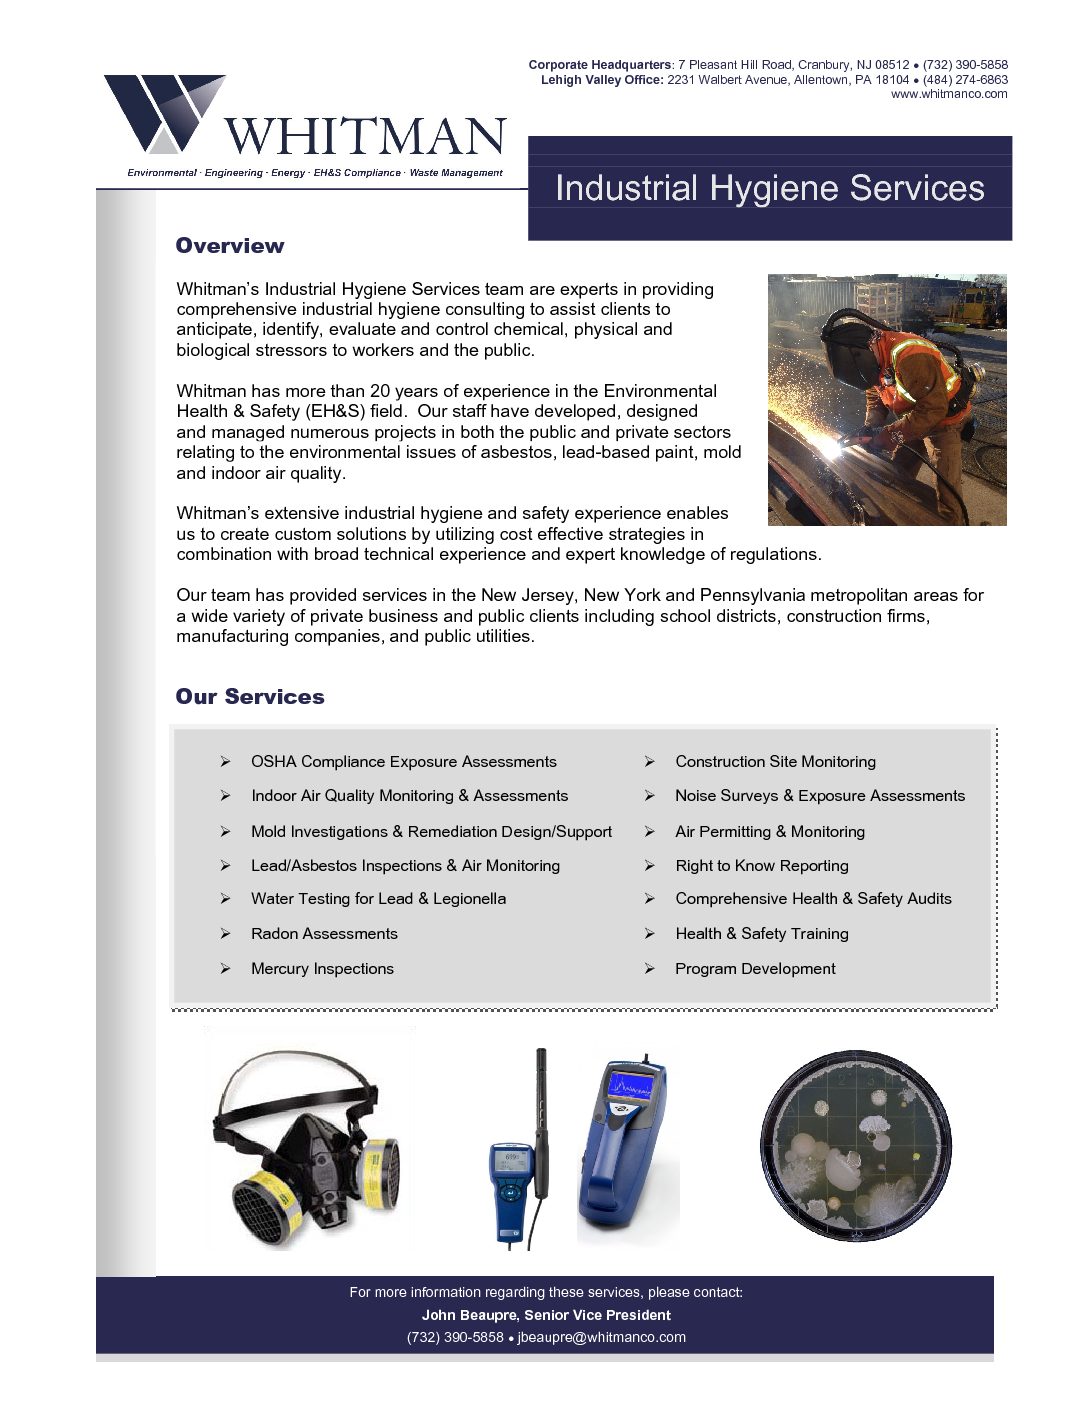 whitman-industrial-hygiene-services